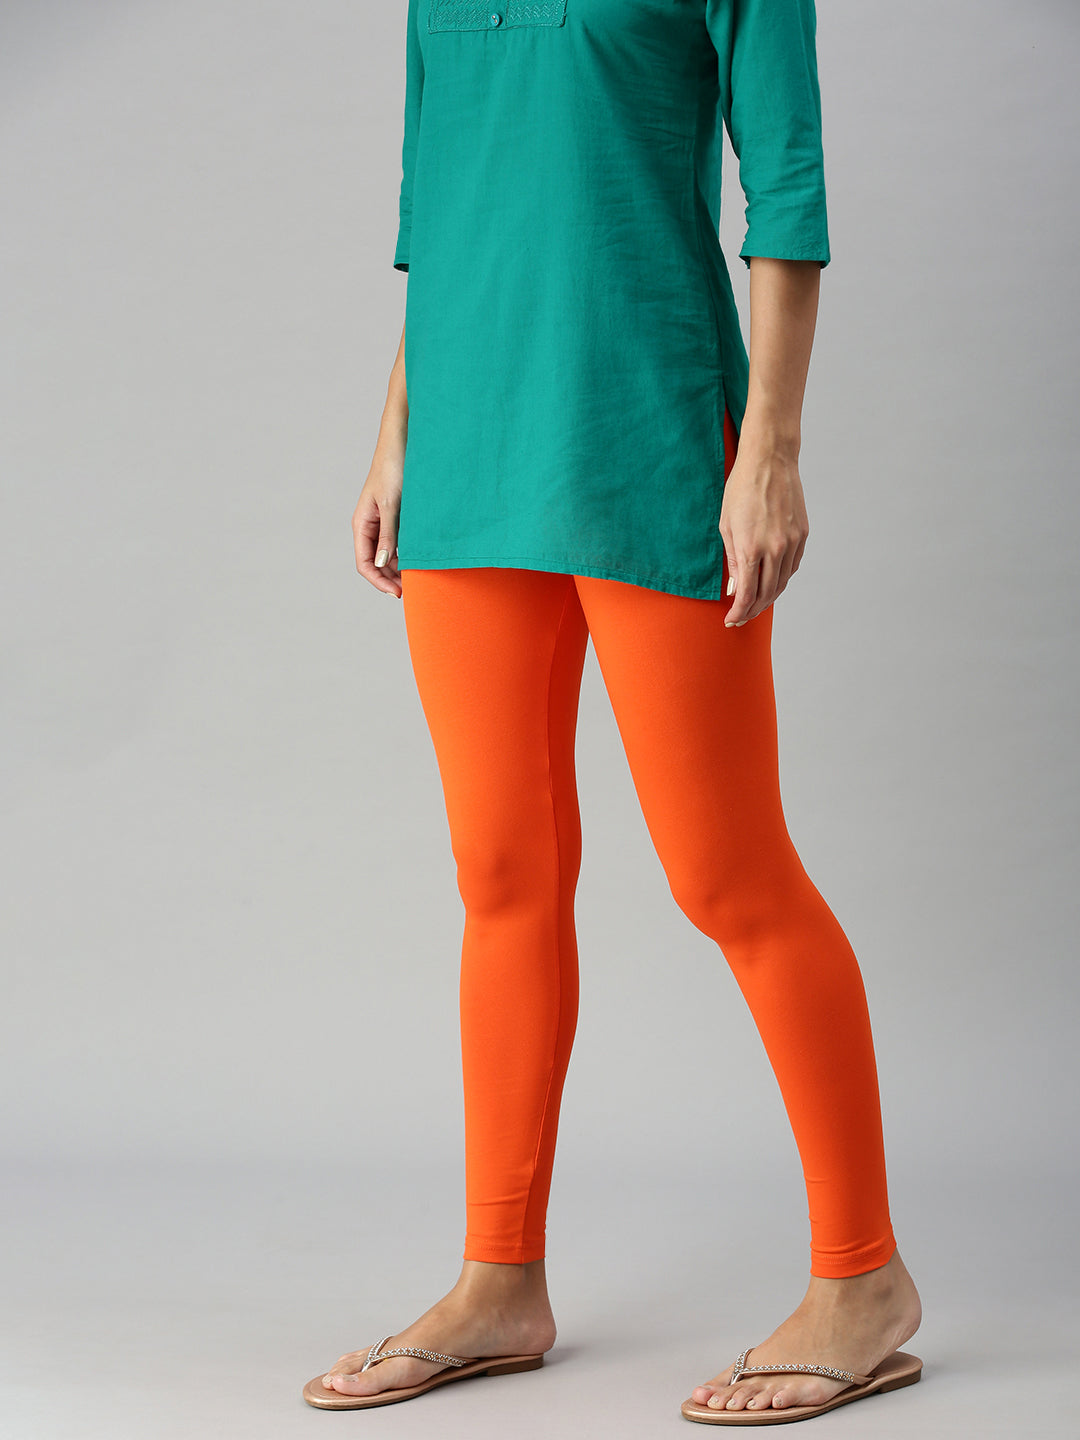 Buy Orange Leggings for Women by Plus Size Online | Ajio.com